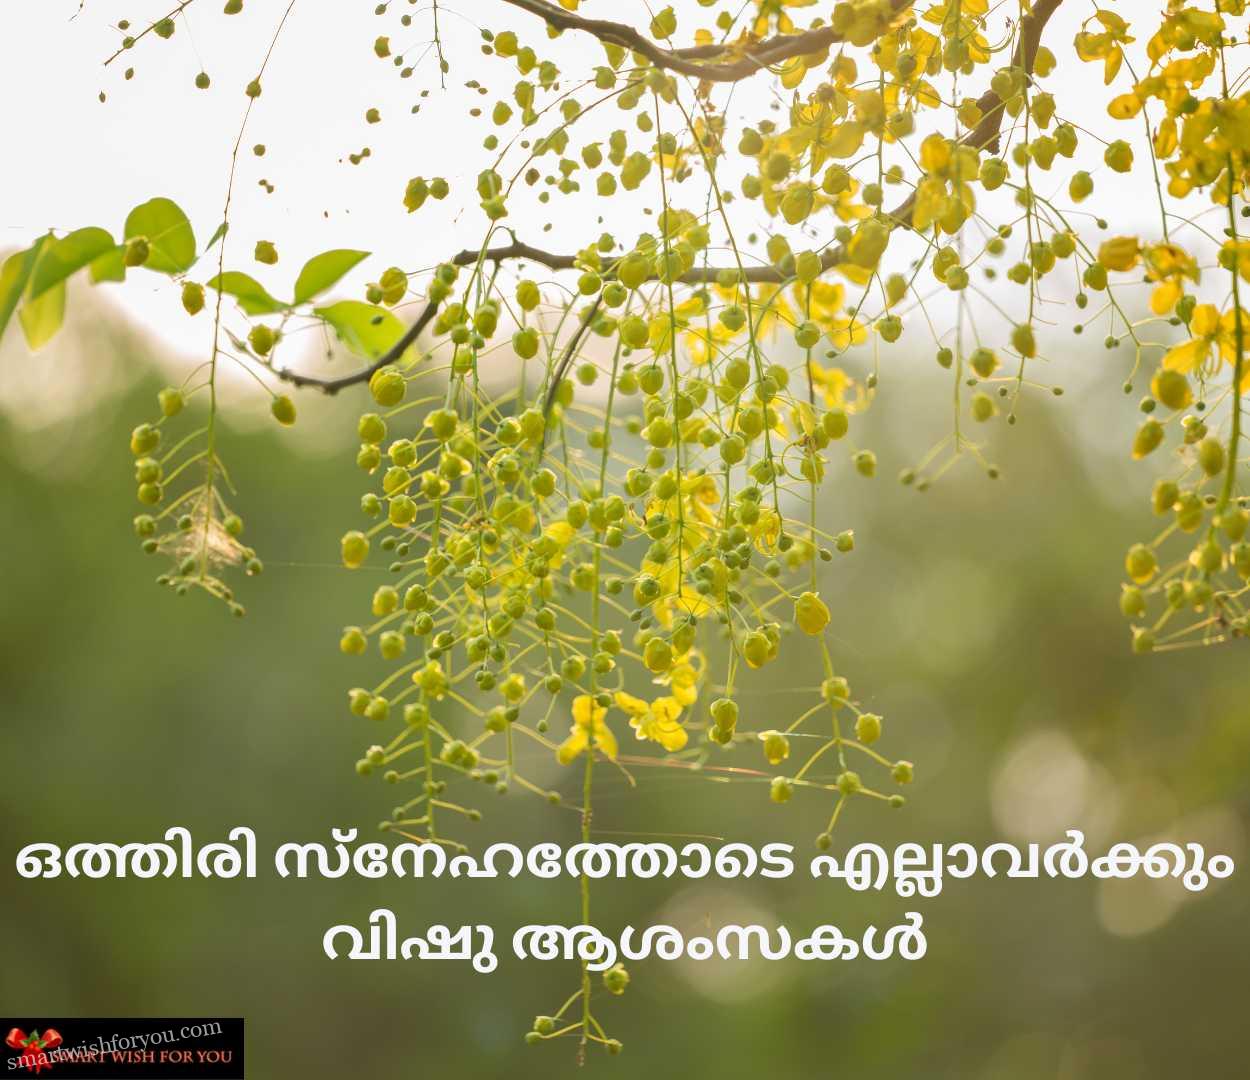 Vishu images Malayalam Download | Vishu images in Malayalam